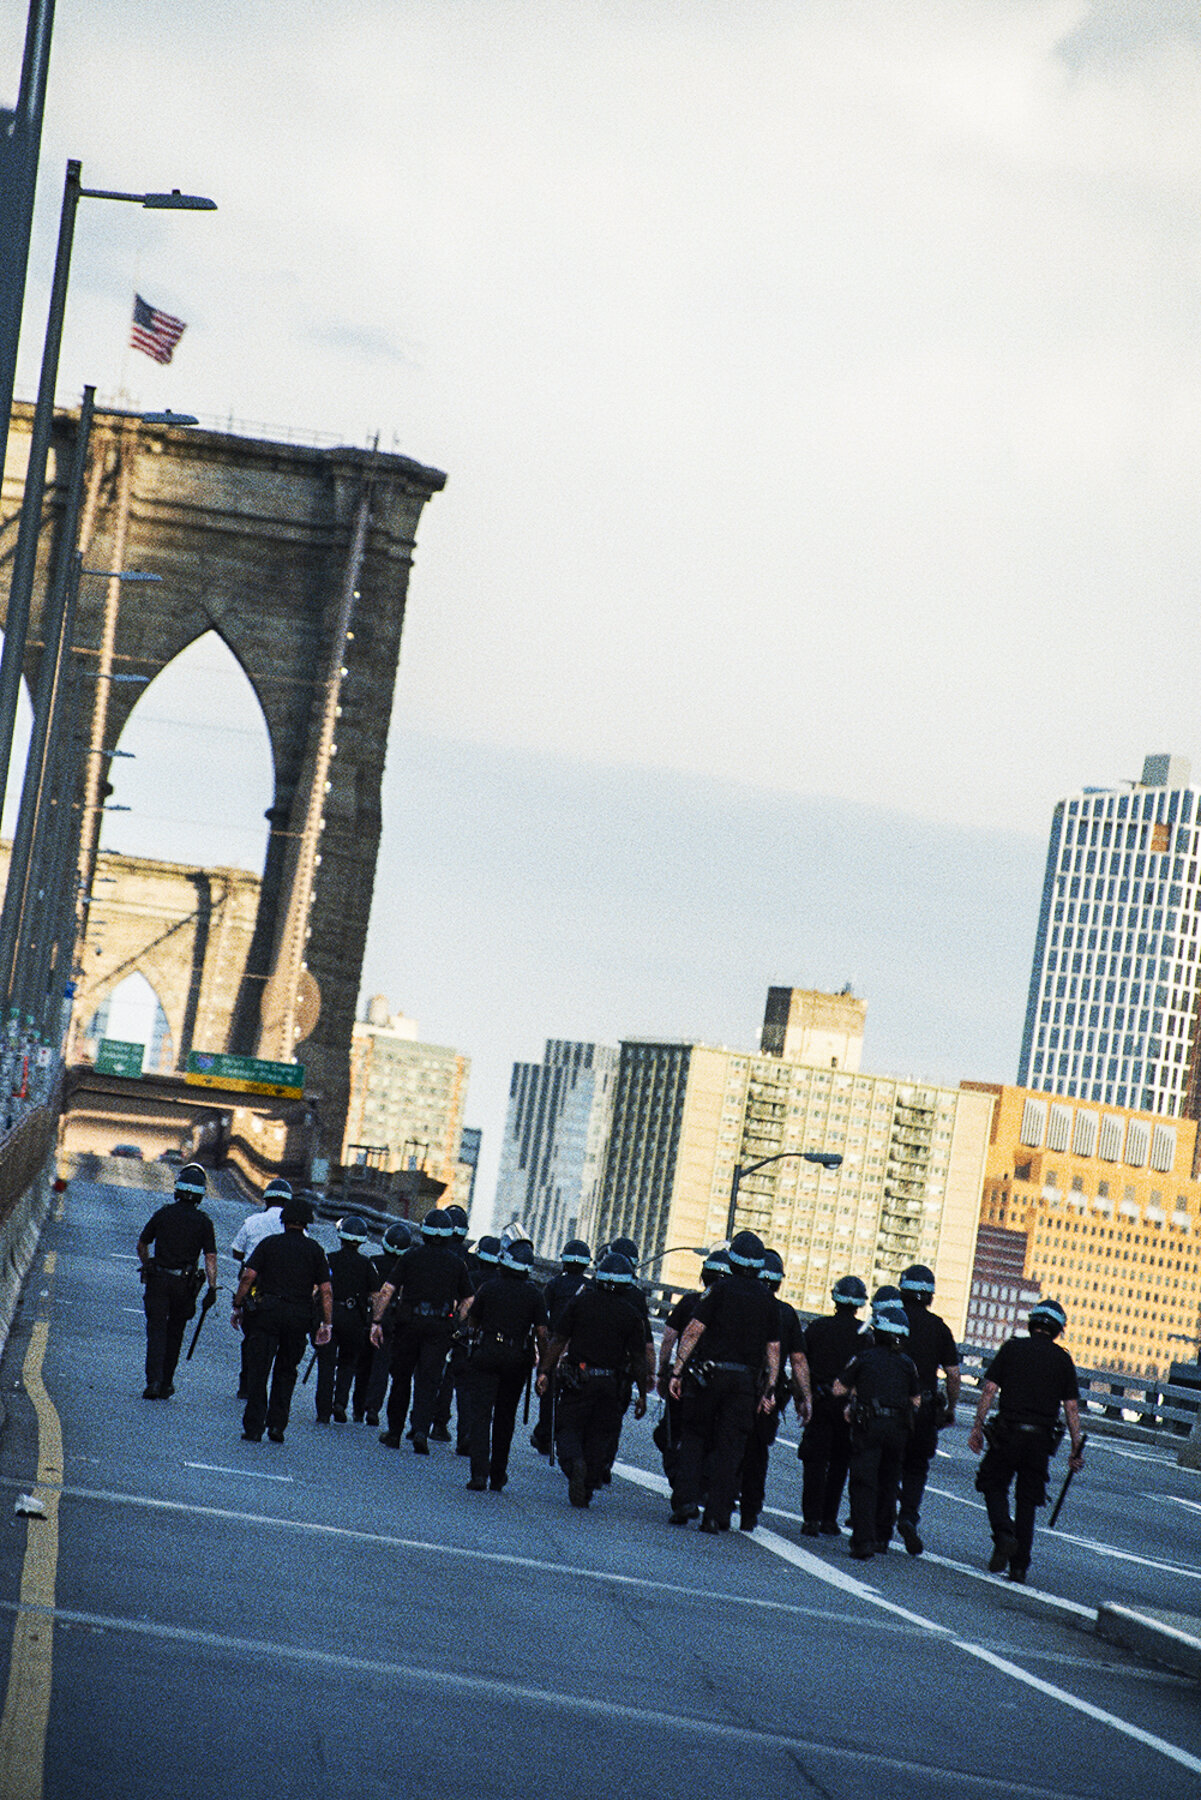 Brooklyn Bridge Protest, 06/05/2020